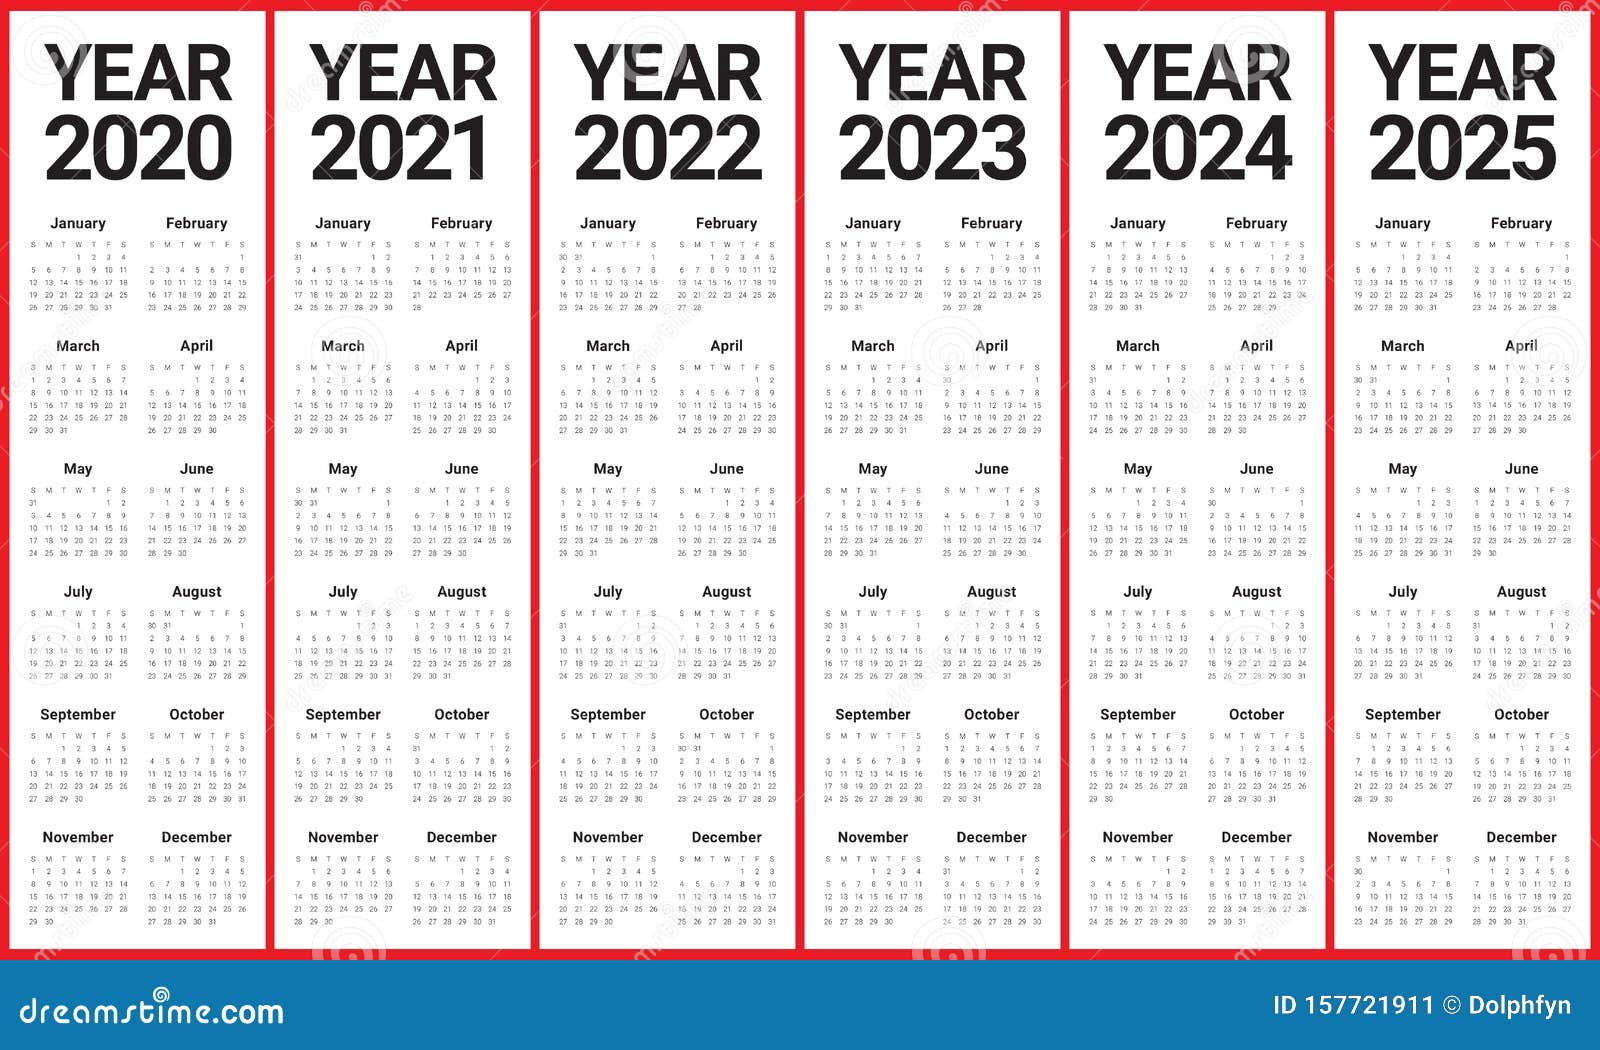 5 Year Calendar 2021 To 2025 | Lunar Calendar